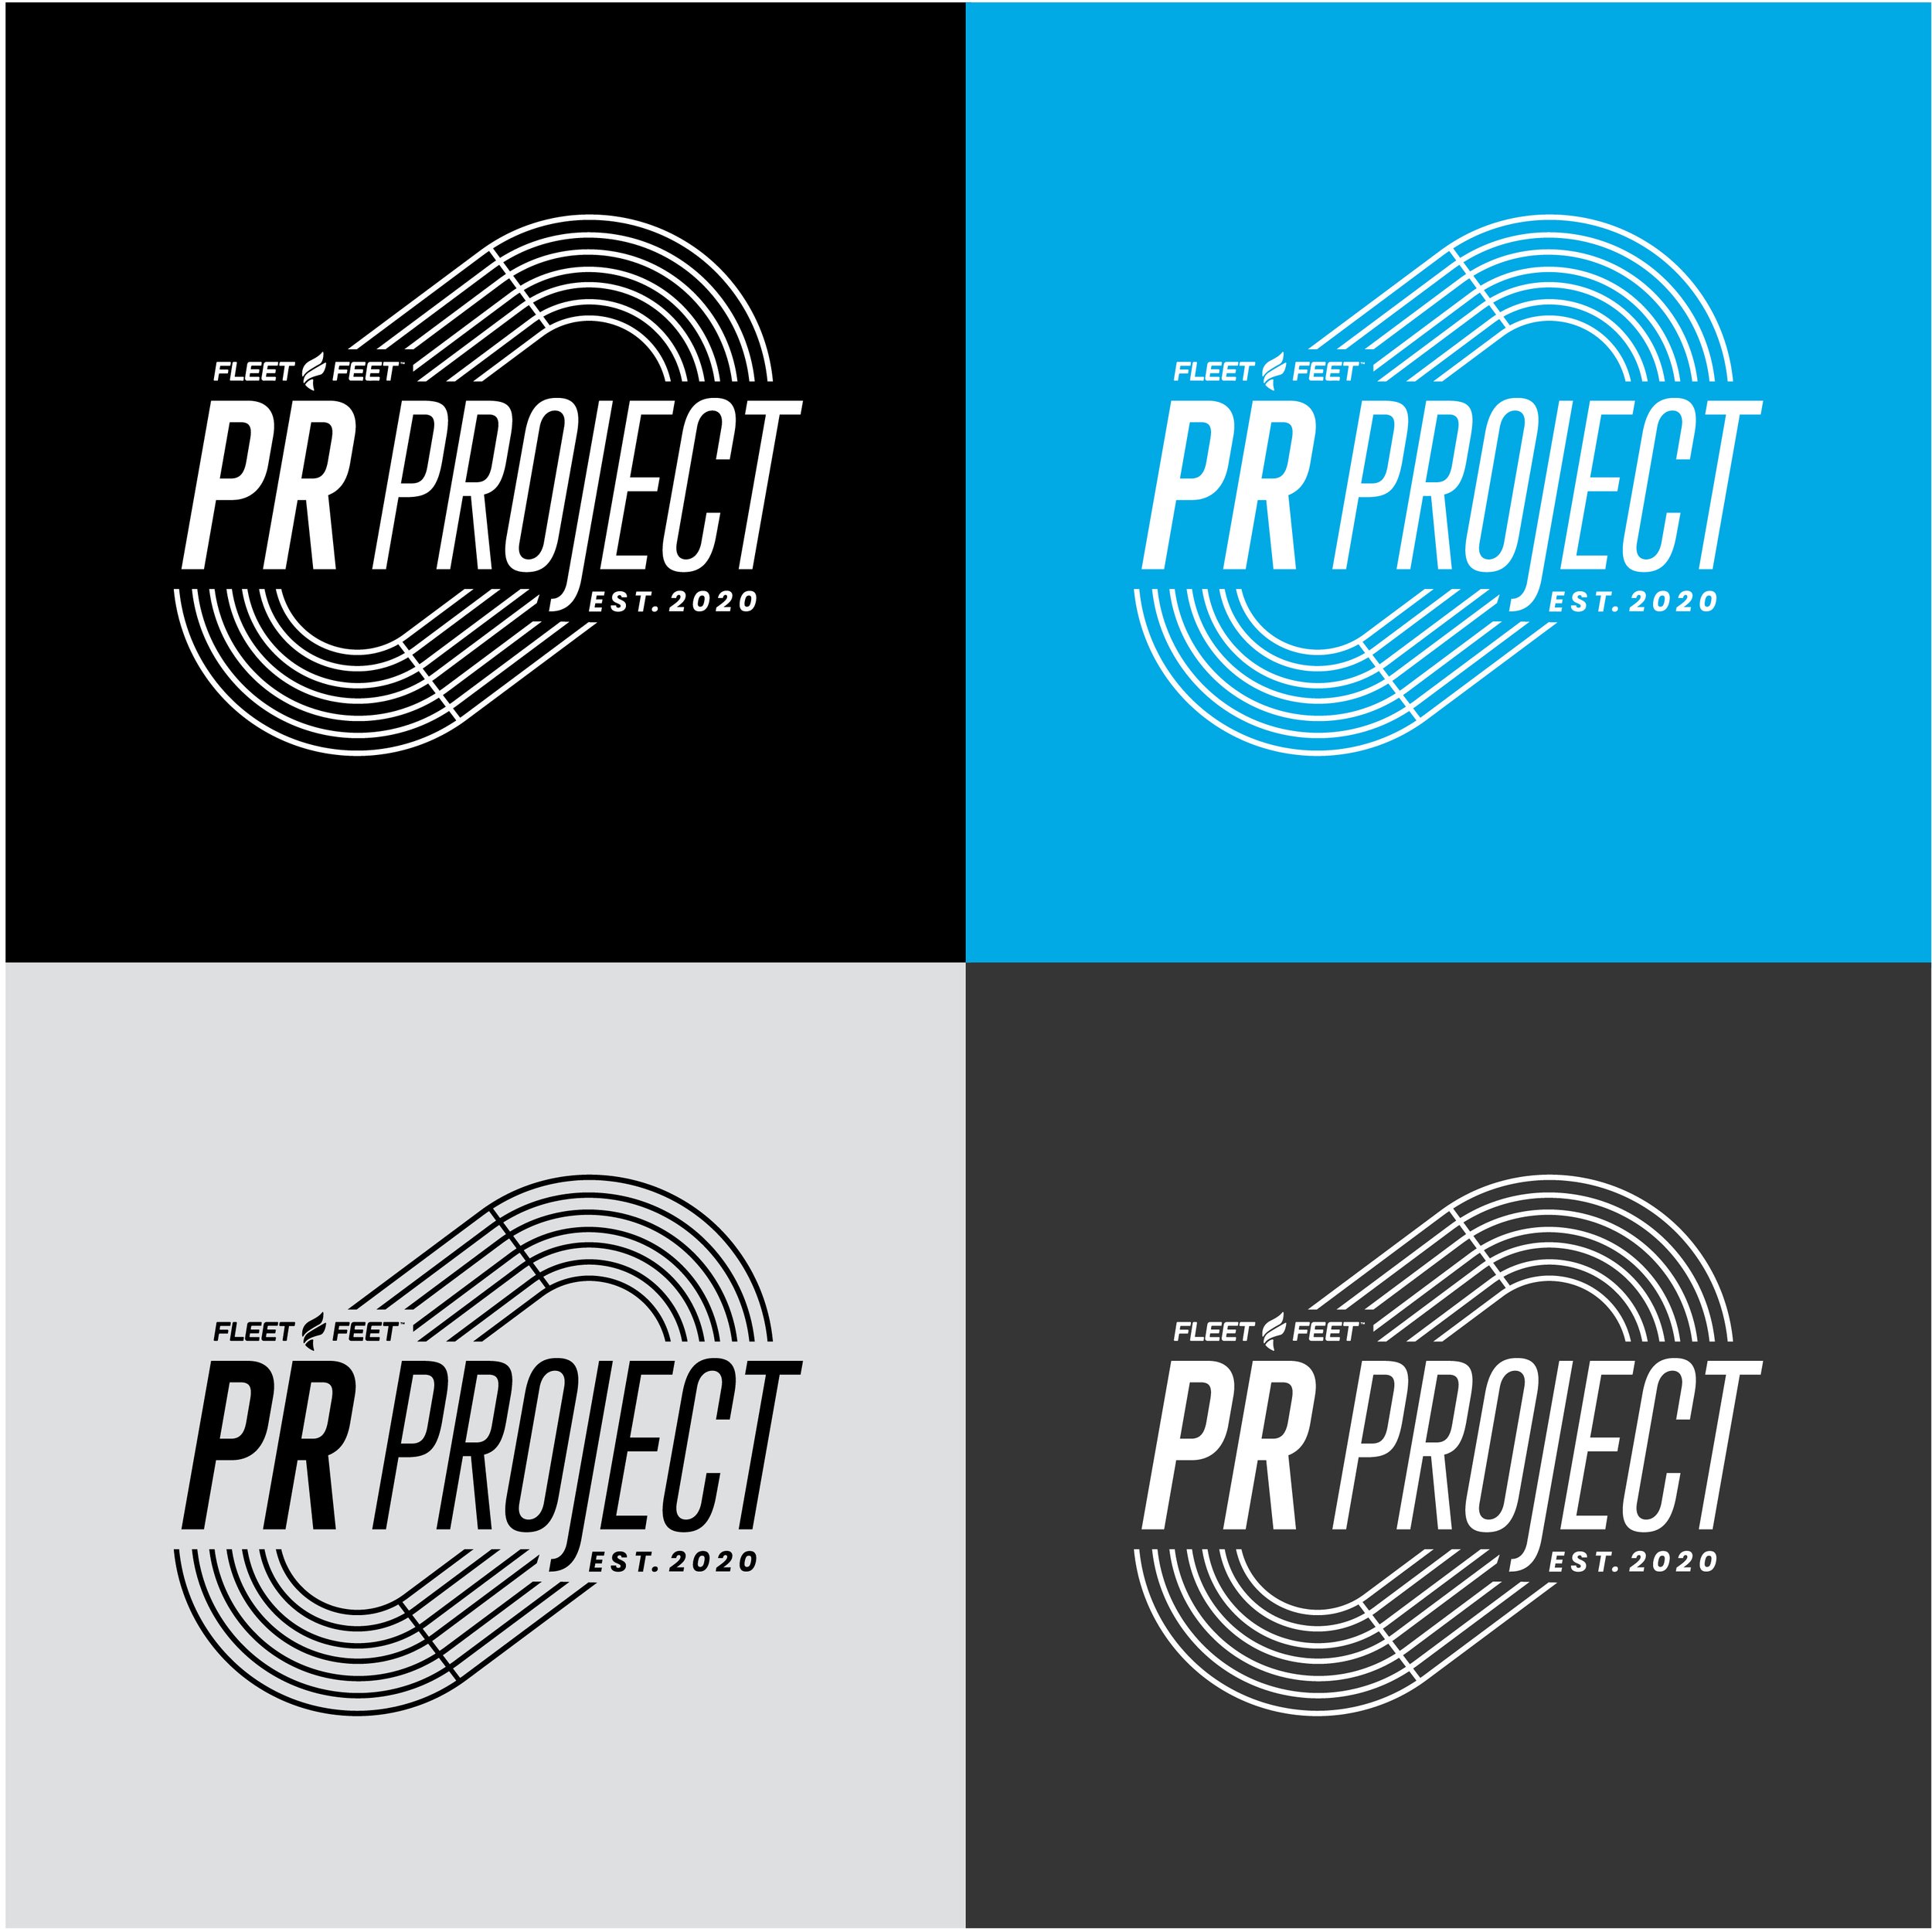 Fleet Feet PR Project Brand Identity